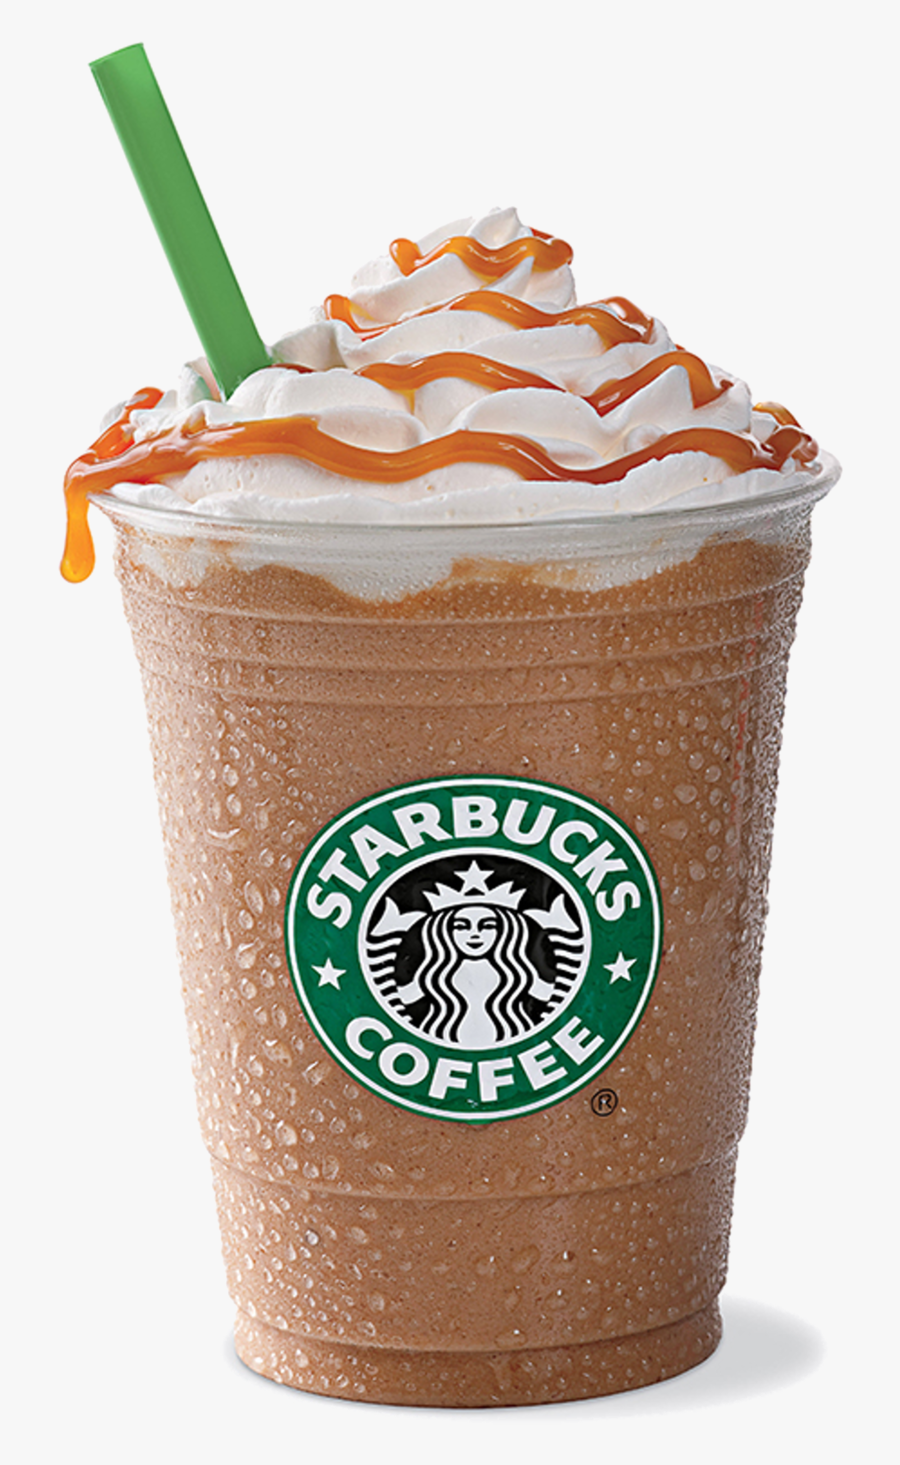 Starbucks Frap Coffee - Caramel Frappuccino Starbucks Png, Transparent Clipart